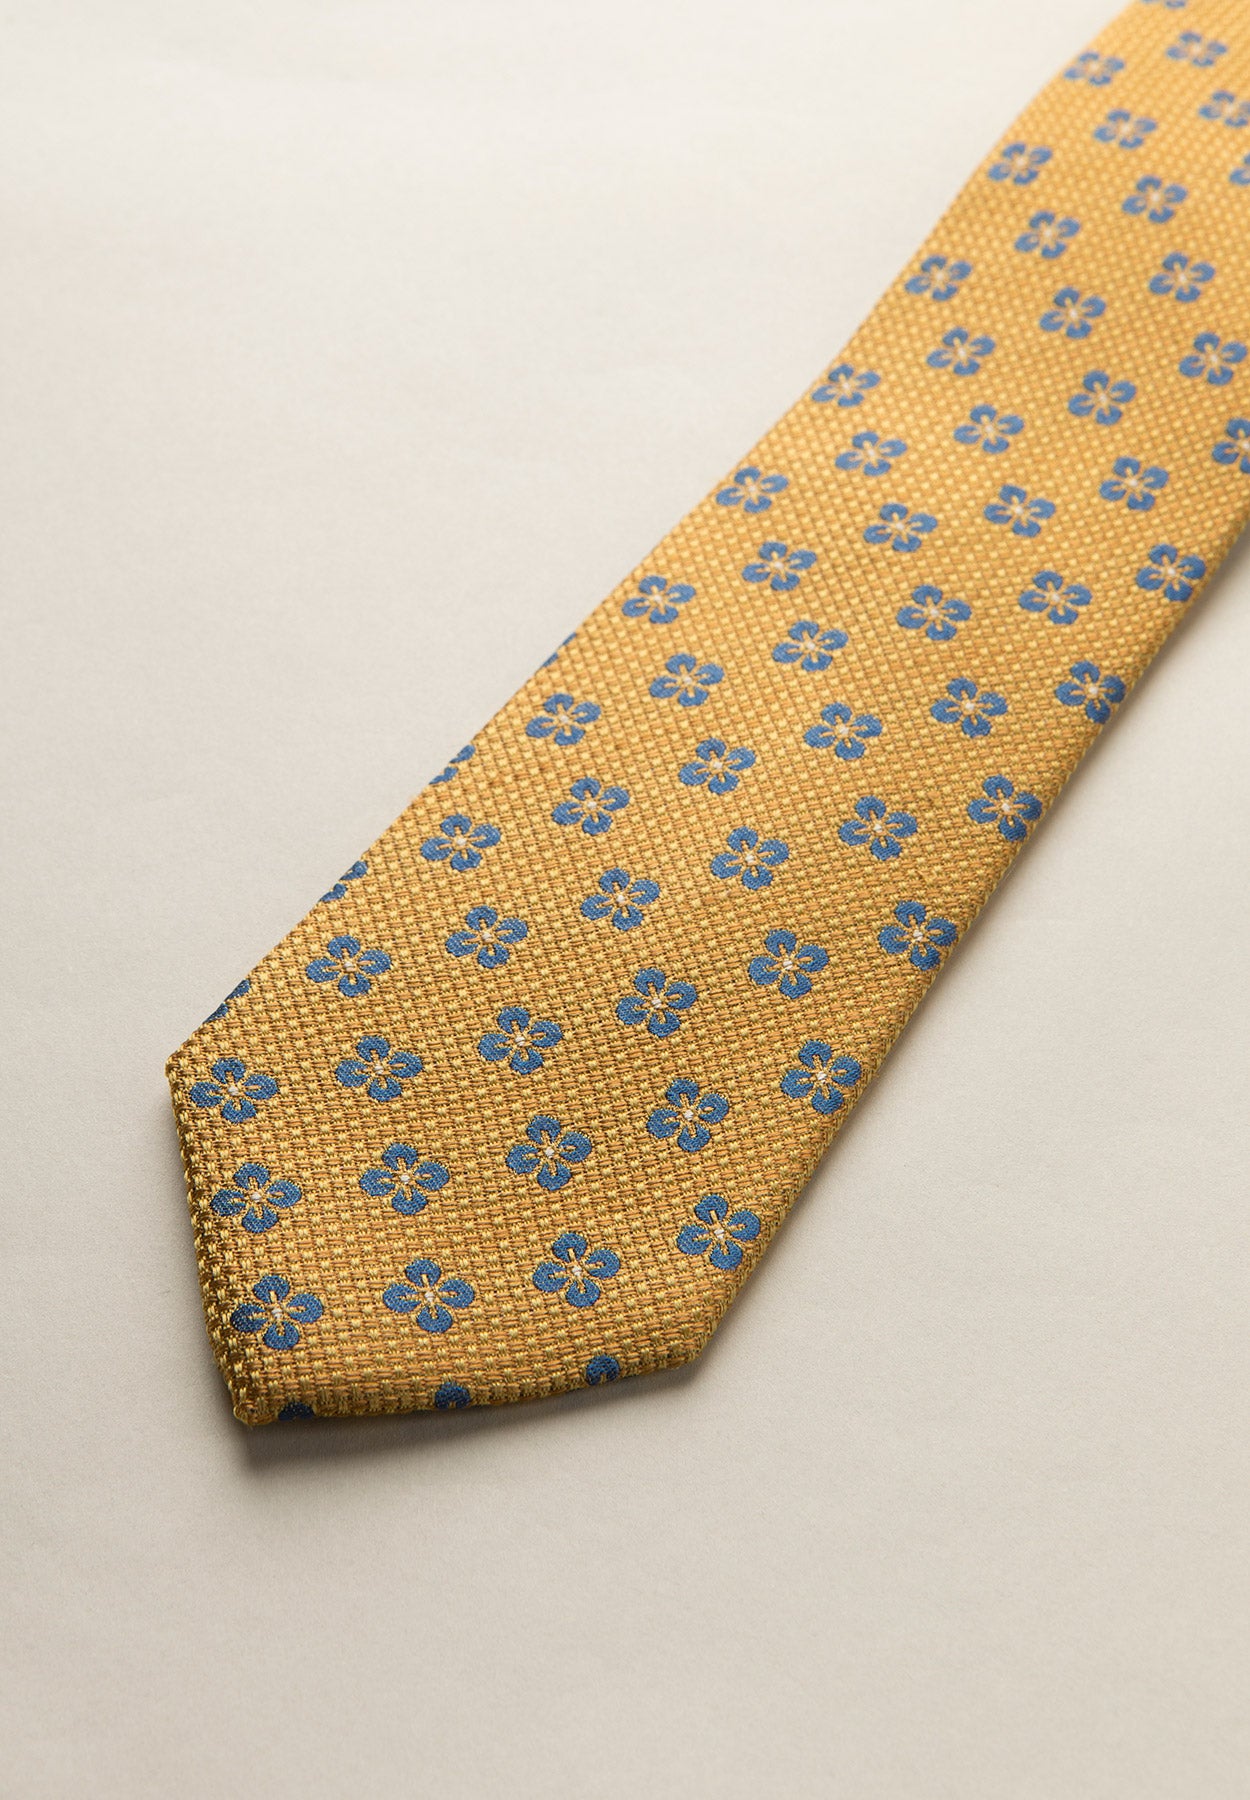 Tie yellow flower patterned blue silk cotton